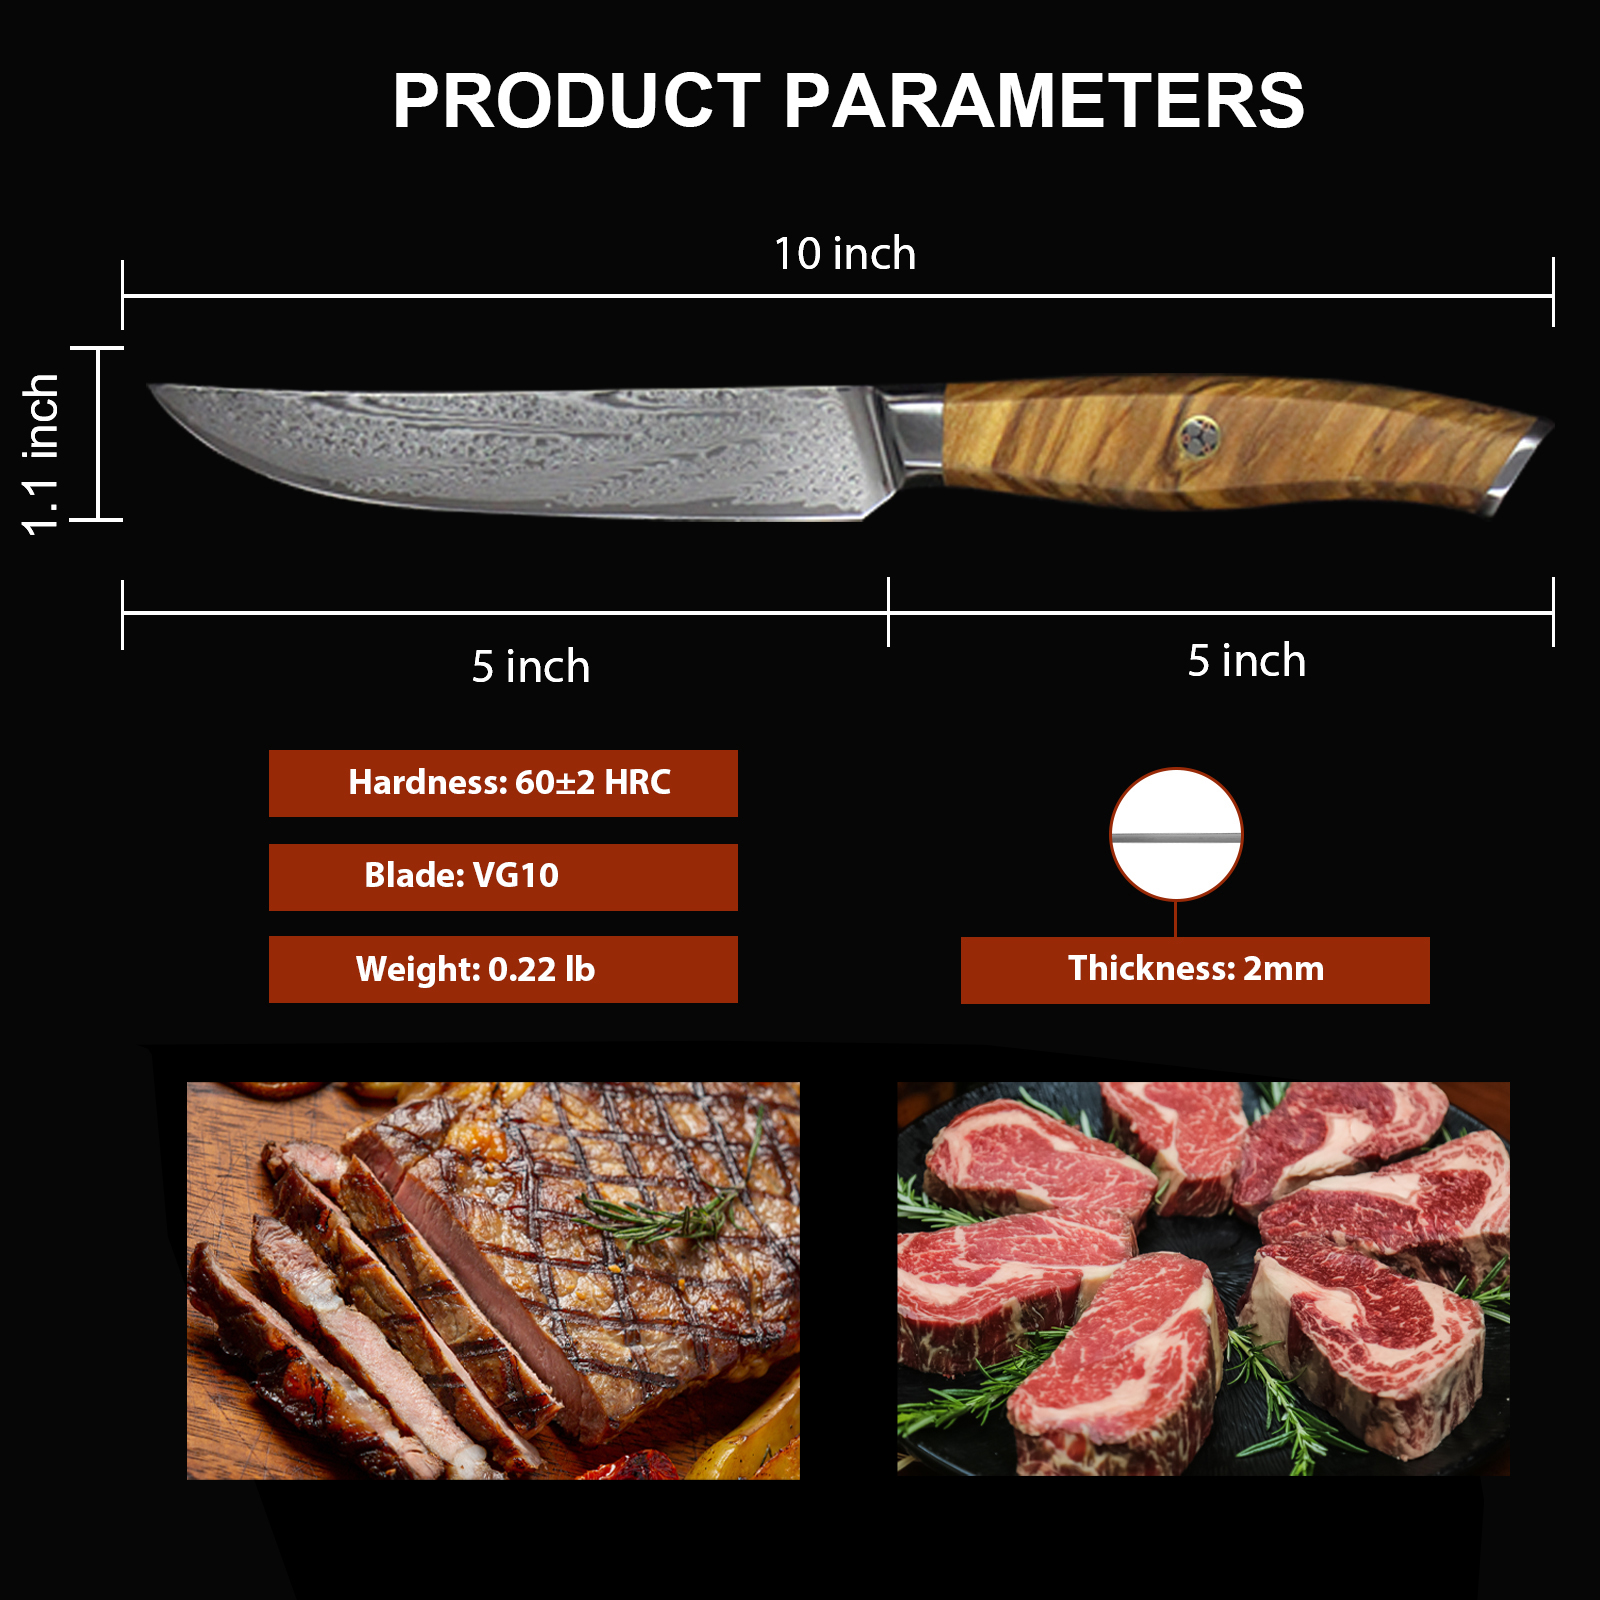 Black Kitchen Knife – 6” All Purpose Steak and Vegetable Knife